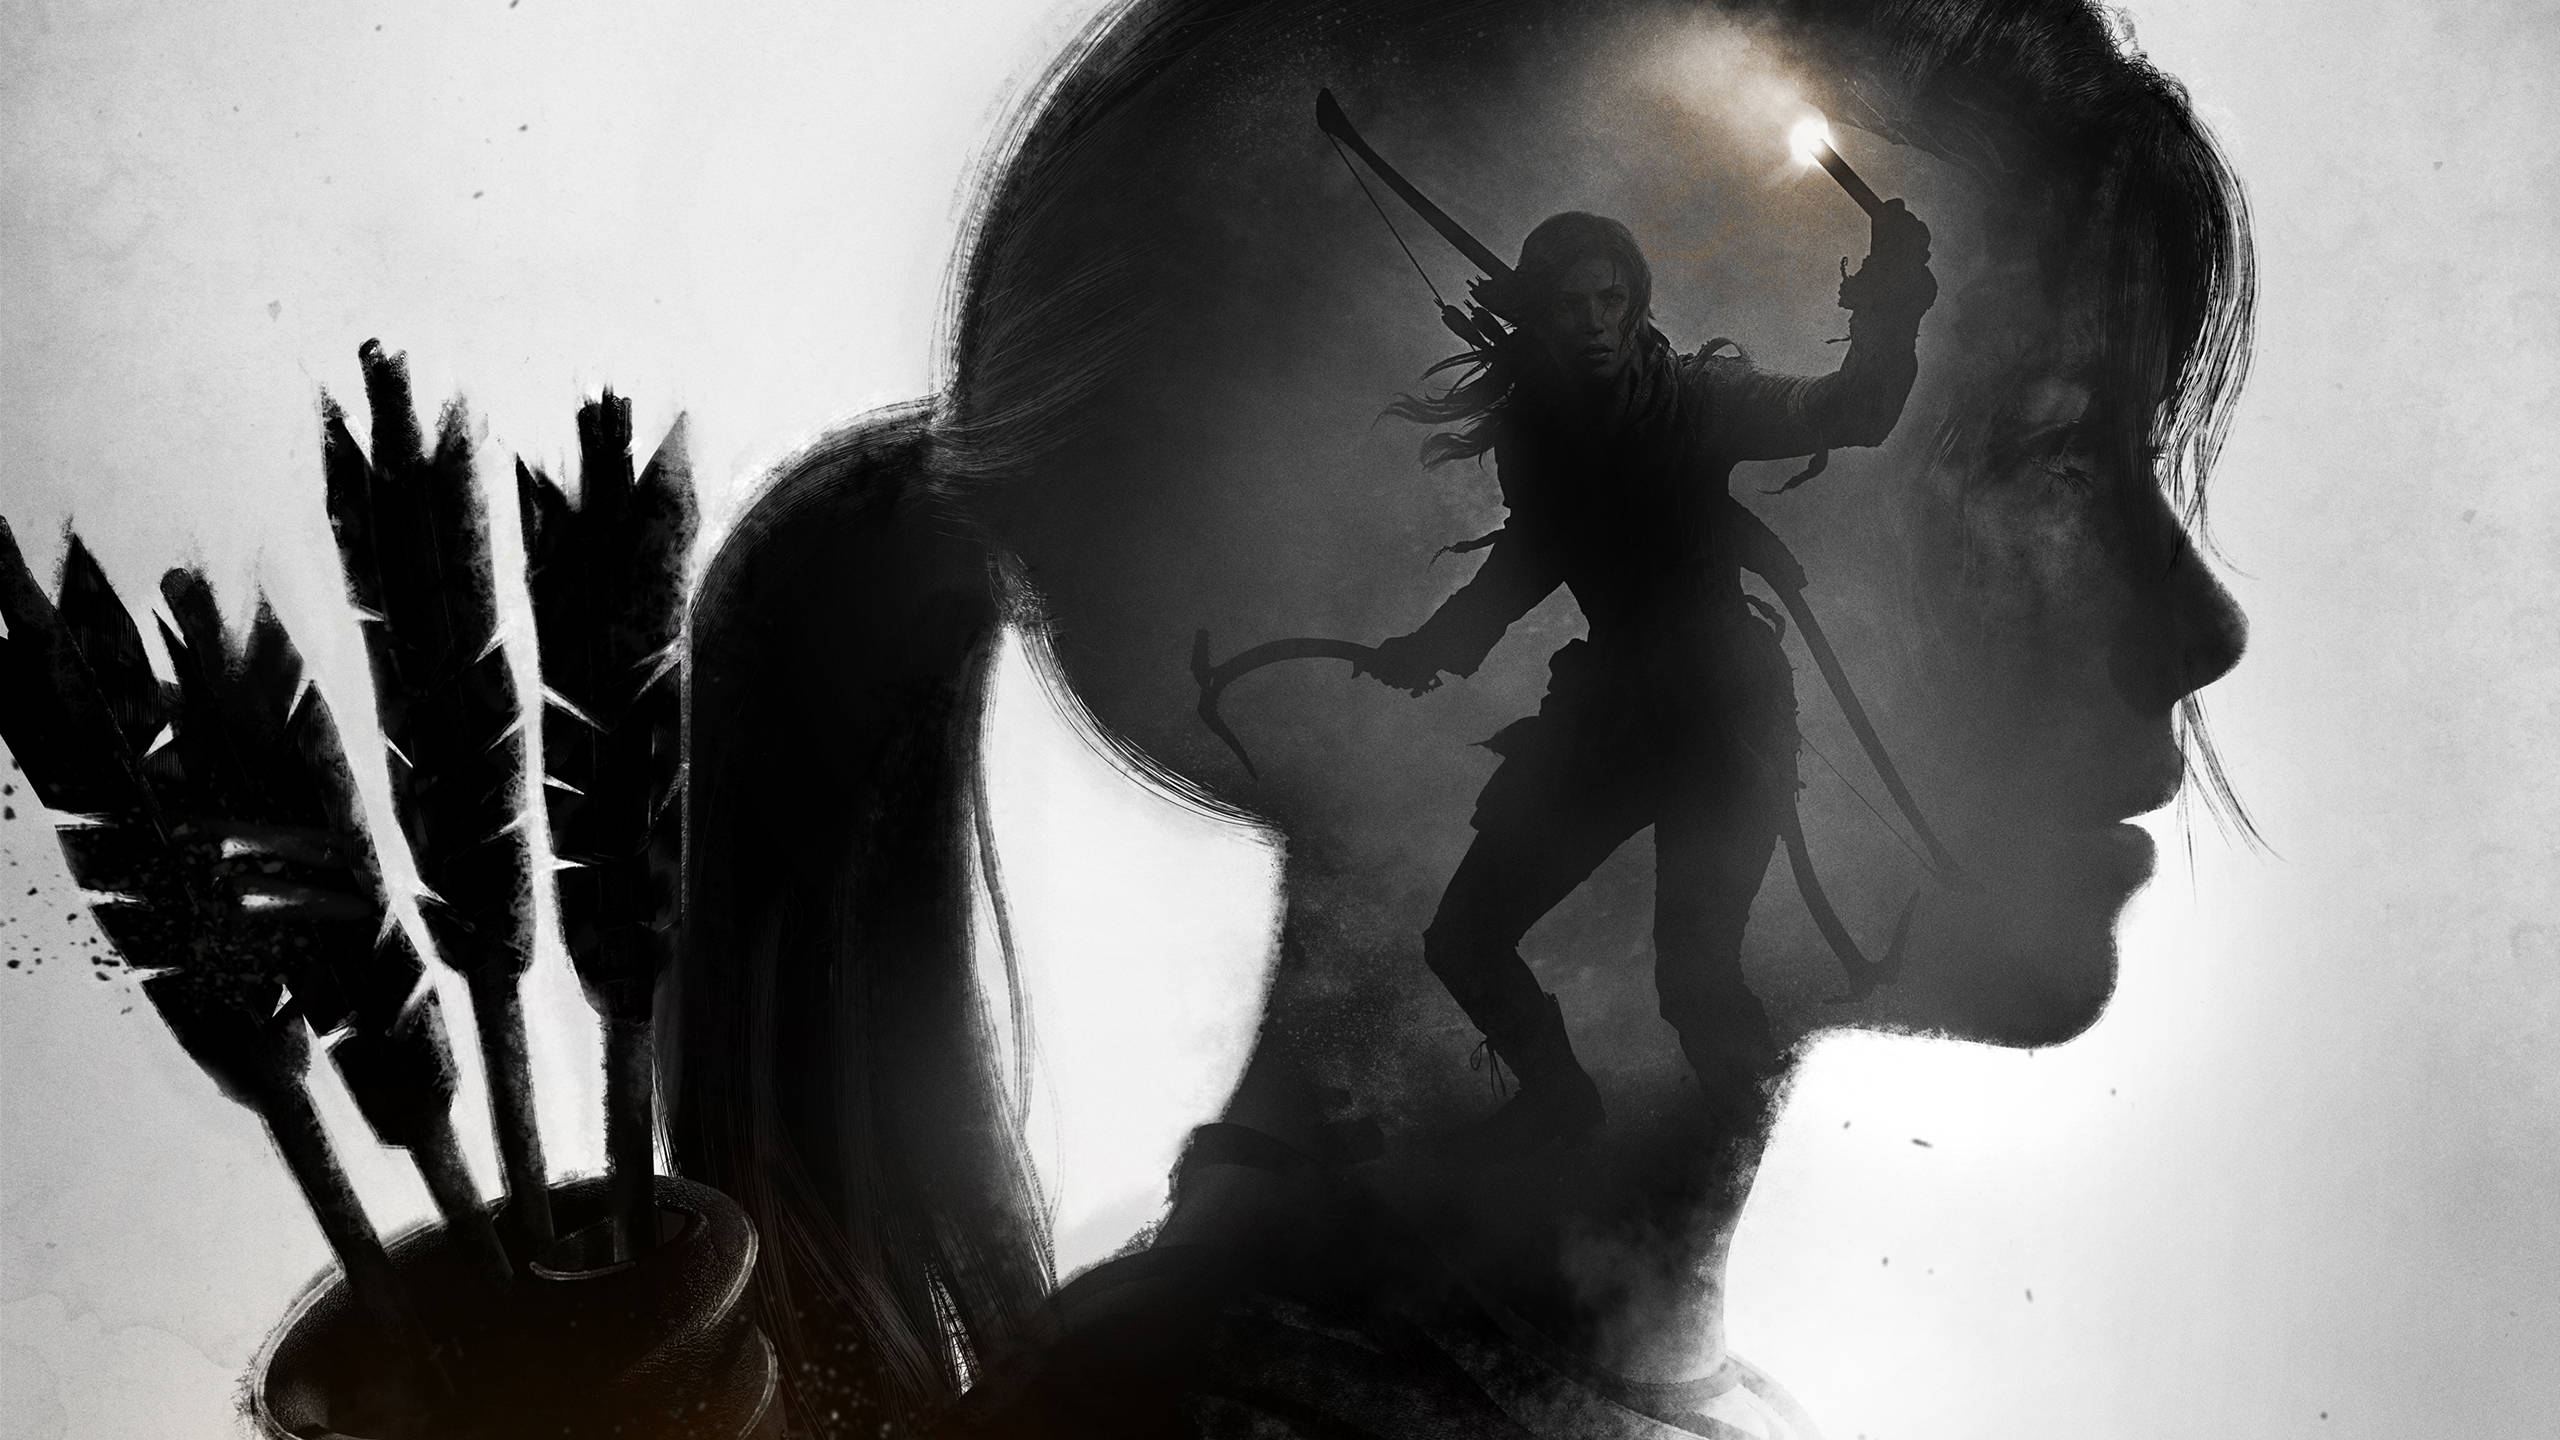 Lara Croft silhouette in Tomb Raider action scene. Wallpaper